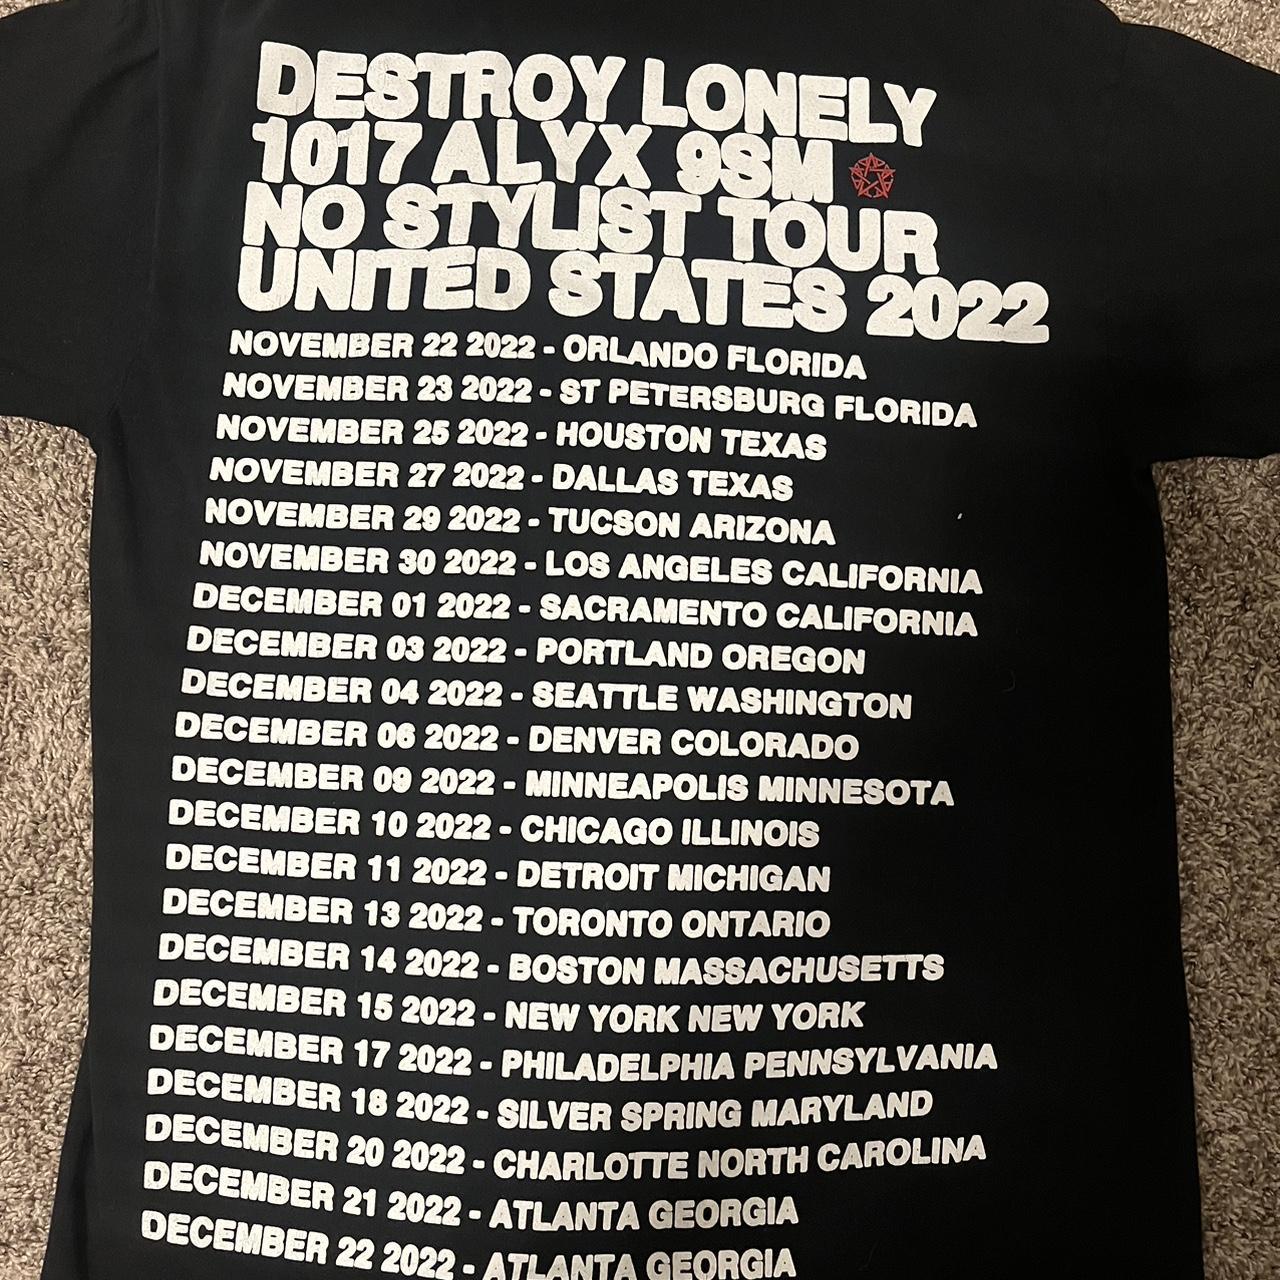 1017 ALYX 9SM × Destroy Lonely No Stylist Tour Merch... - Depop